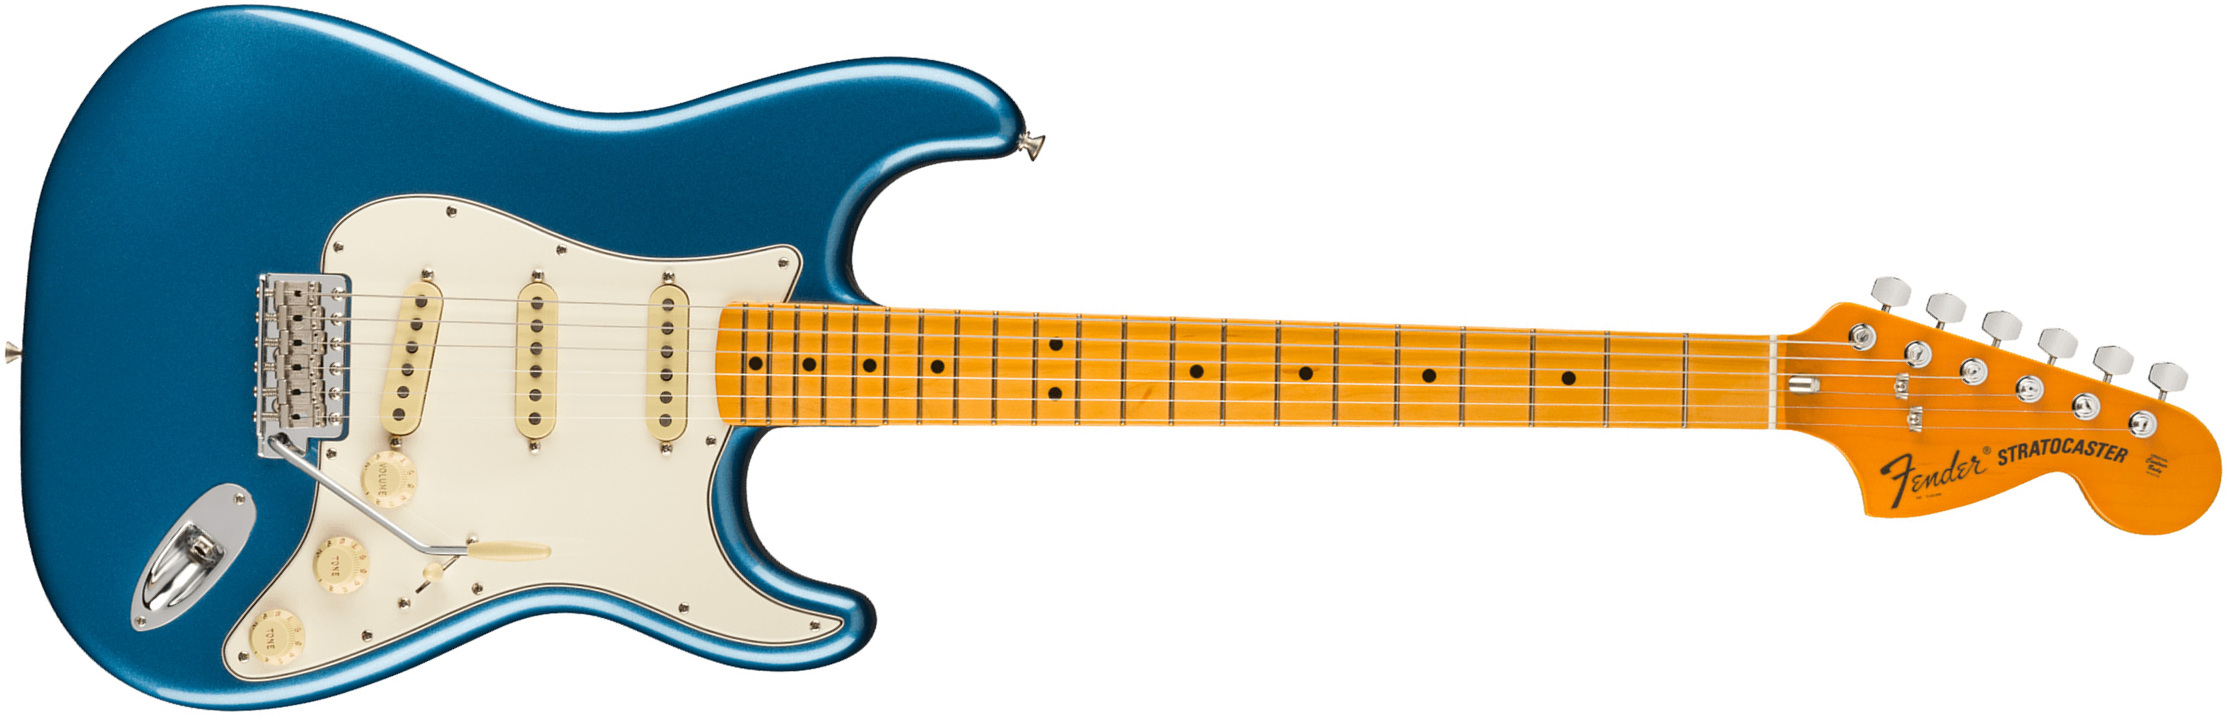 Fender Strat 1973 American Vintage Ii Usa 3s Trem Mn - Lake Placid Blue - Guitare Électrique Forme Str - Main picture